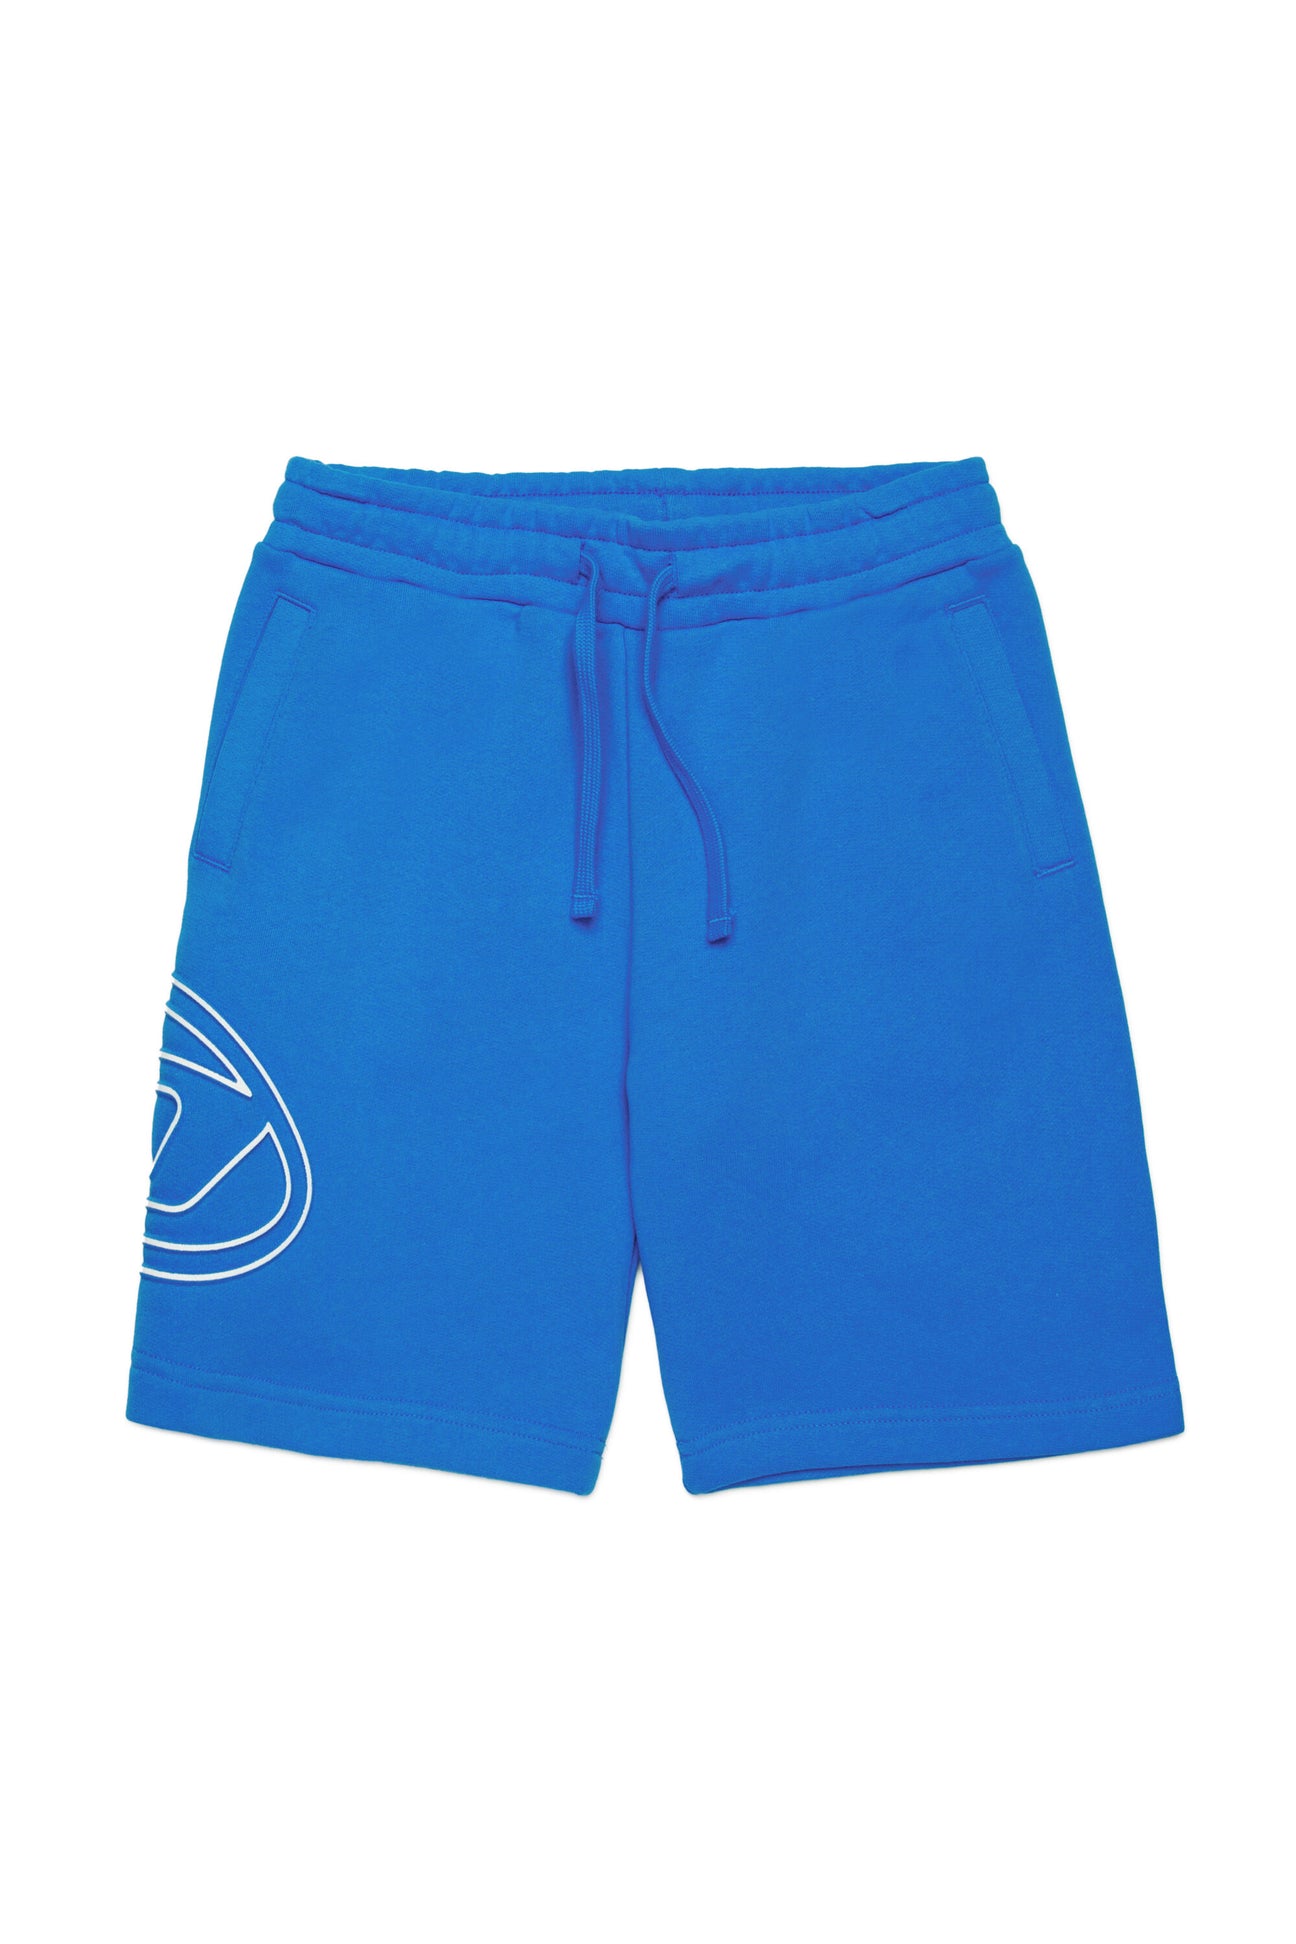 Pantalones cortos en chándal con logotipo Oval D 